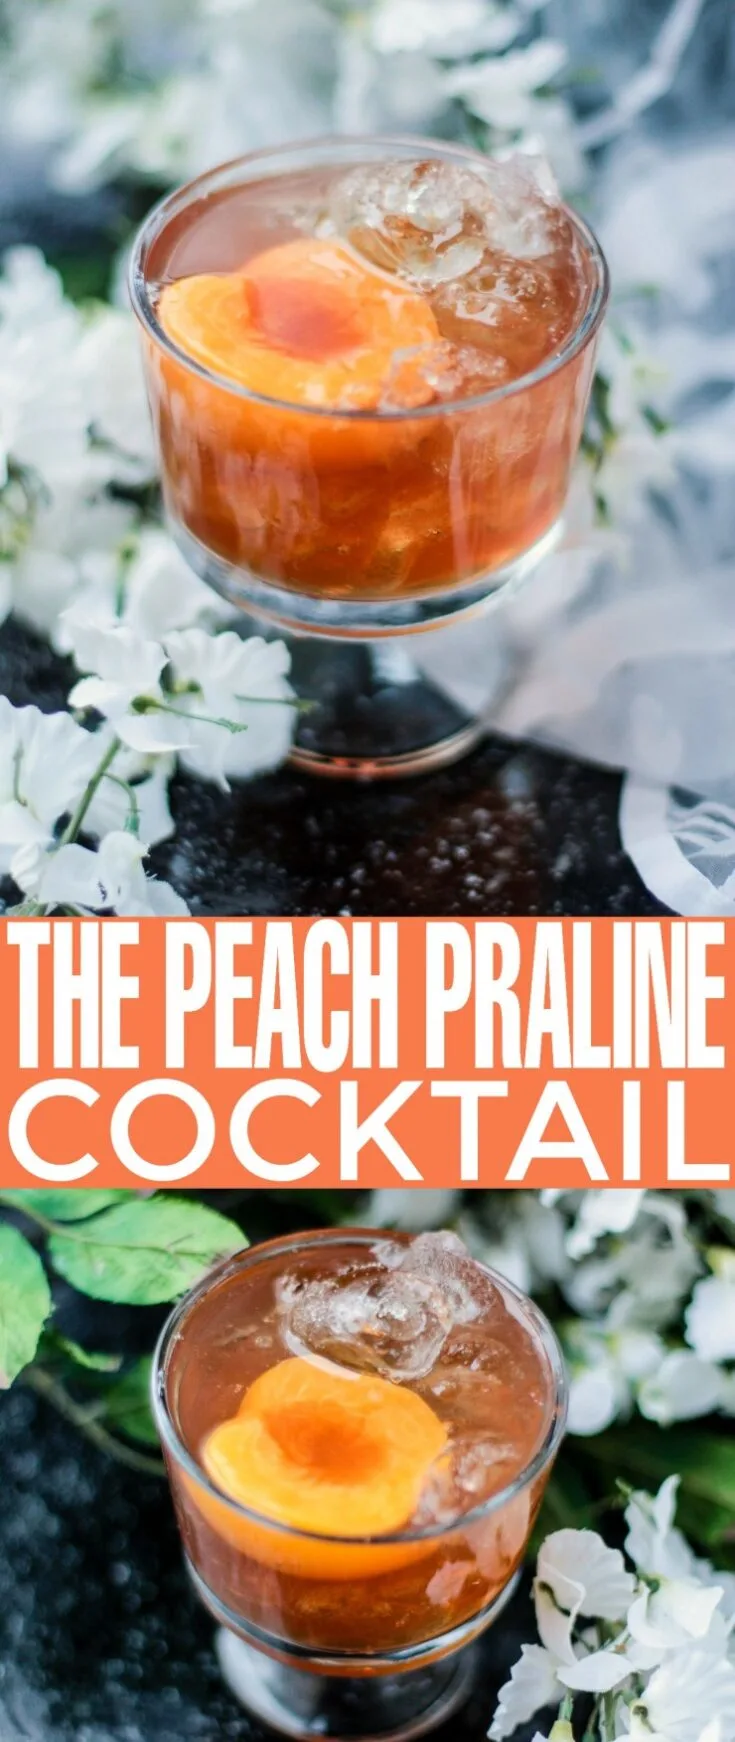 The Peach Praline Cocktail